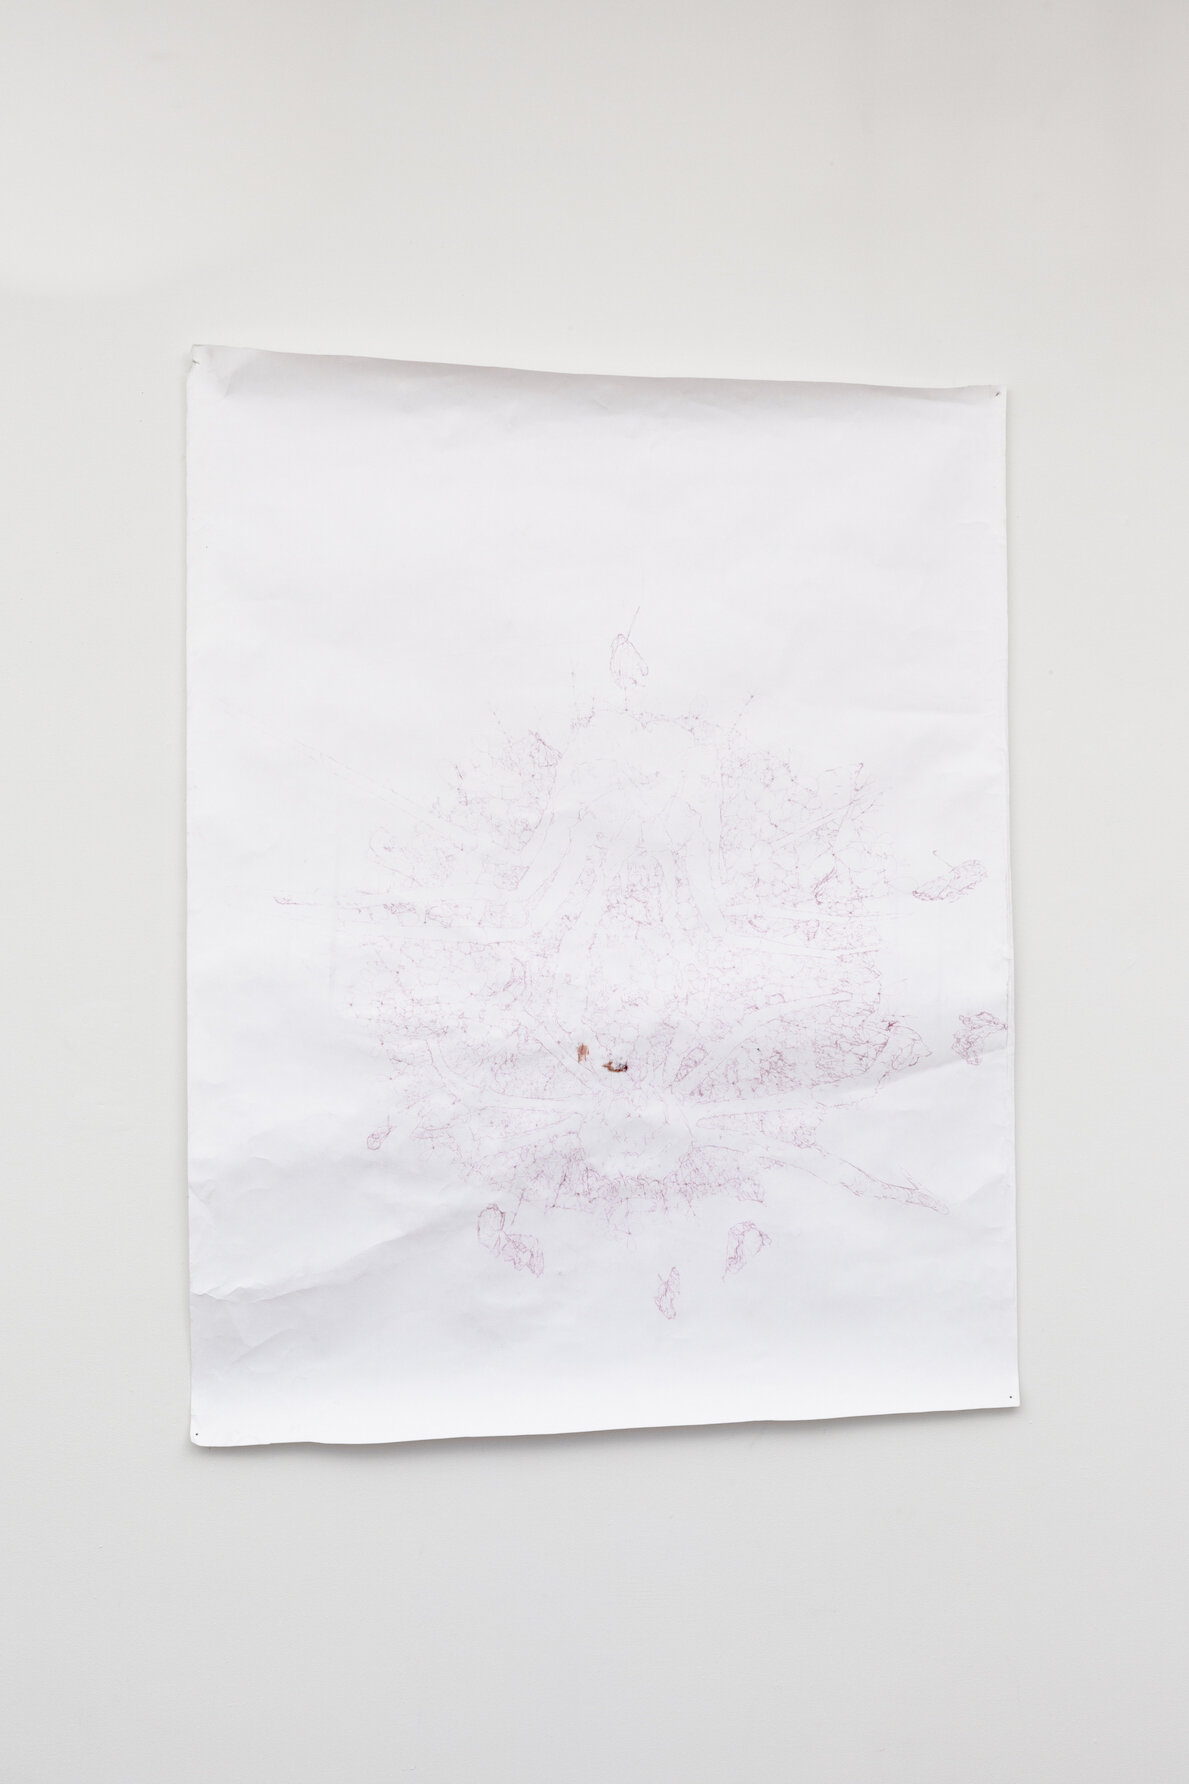  Willard Klein,  Tiny Joining Hands , 2019, Ballpoint Pen on Paper, 48 x 55 in (121.9 x 139.7 cm)  